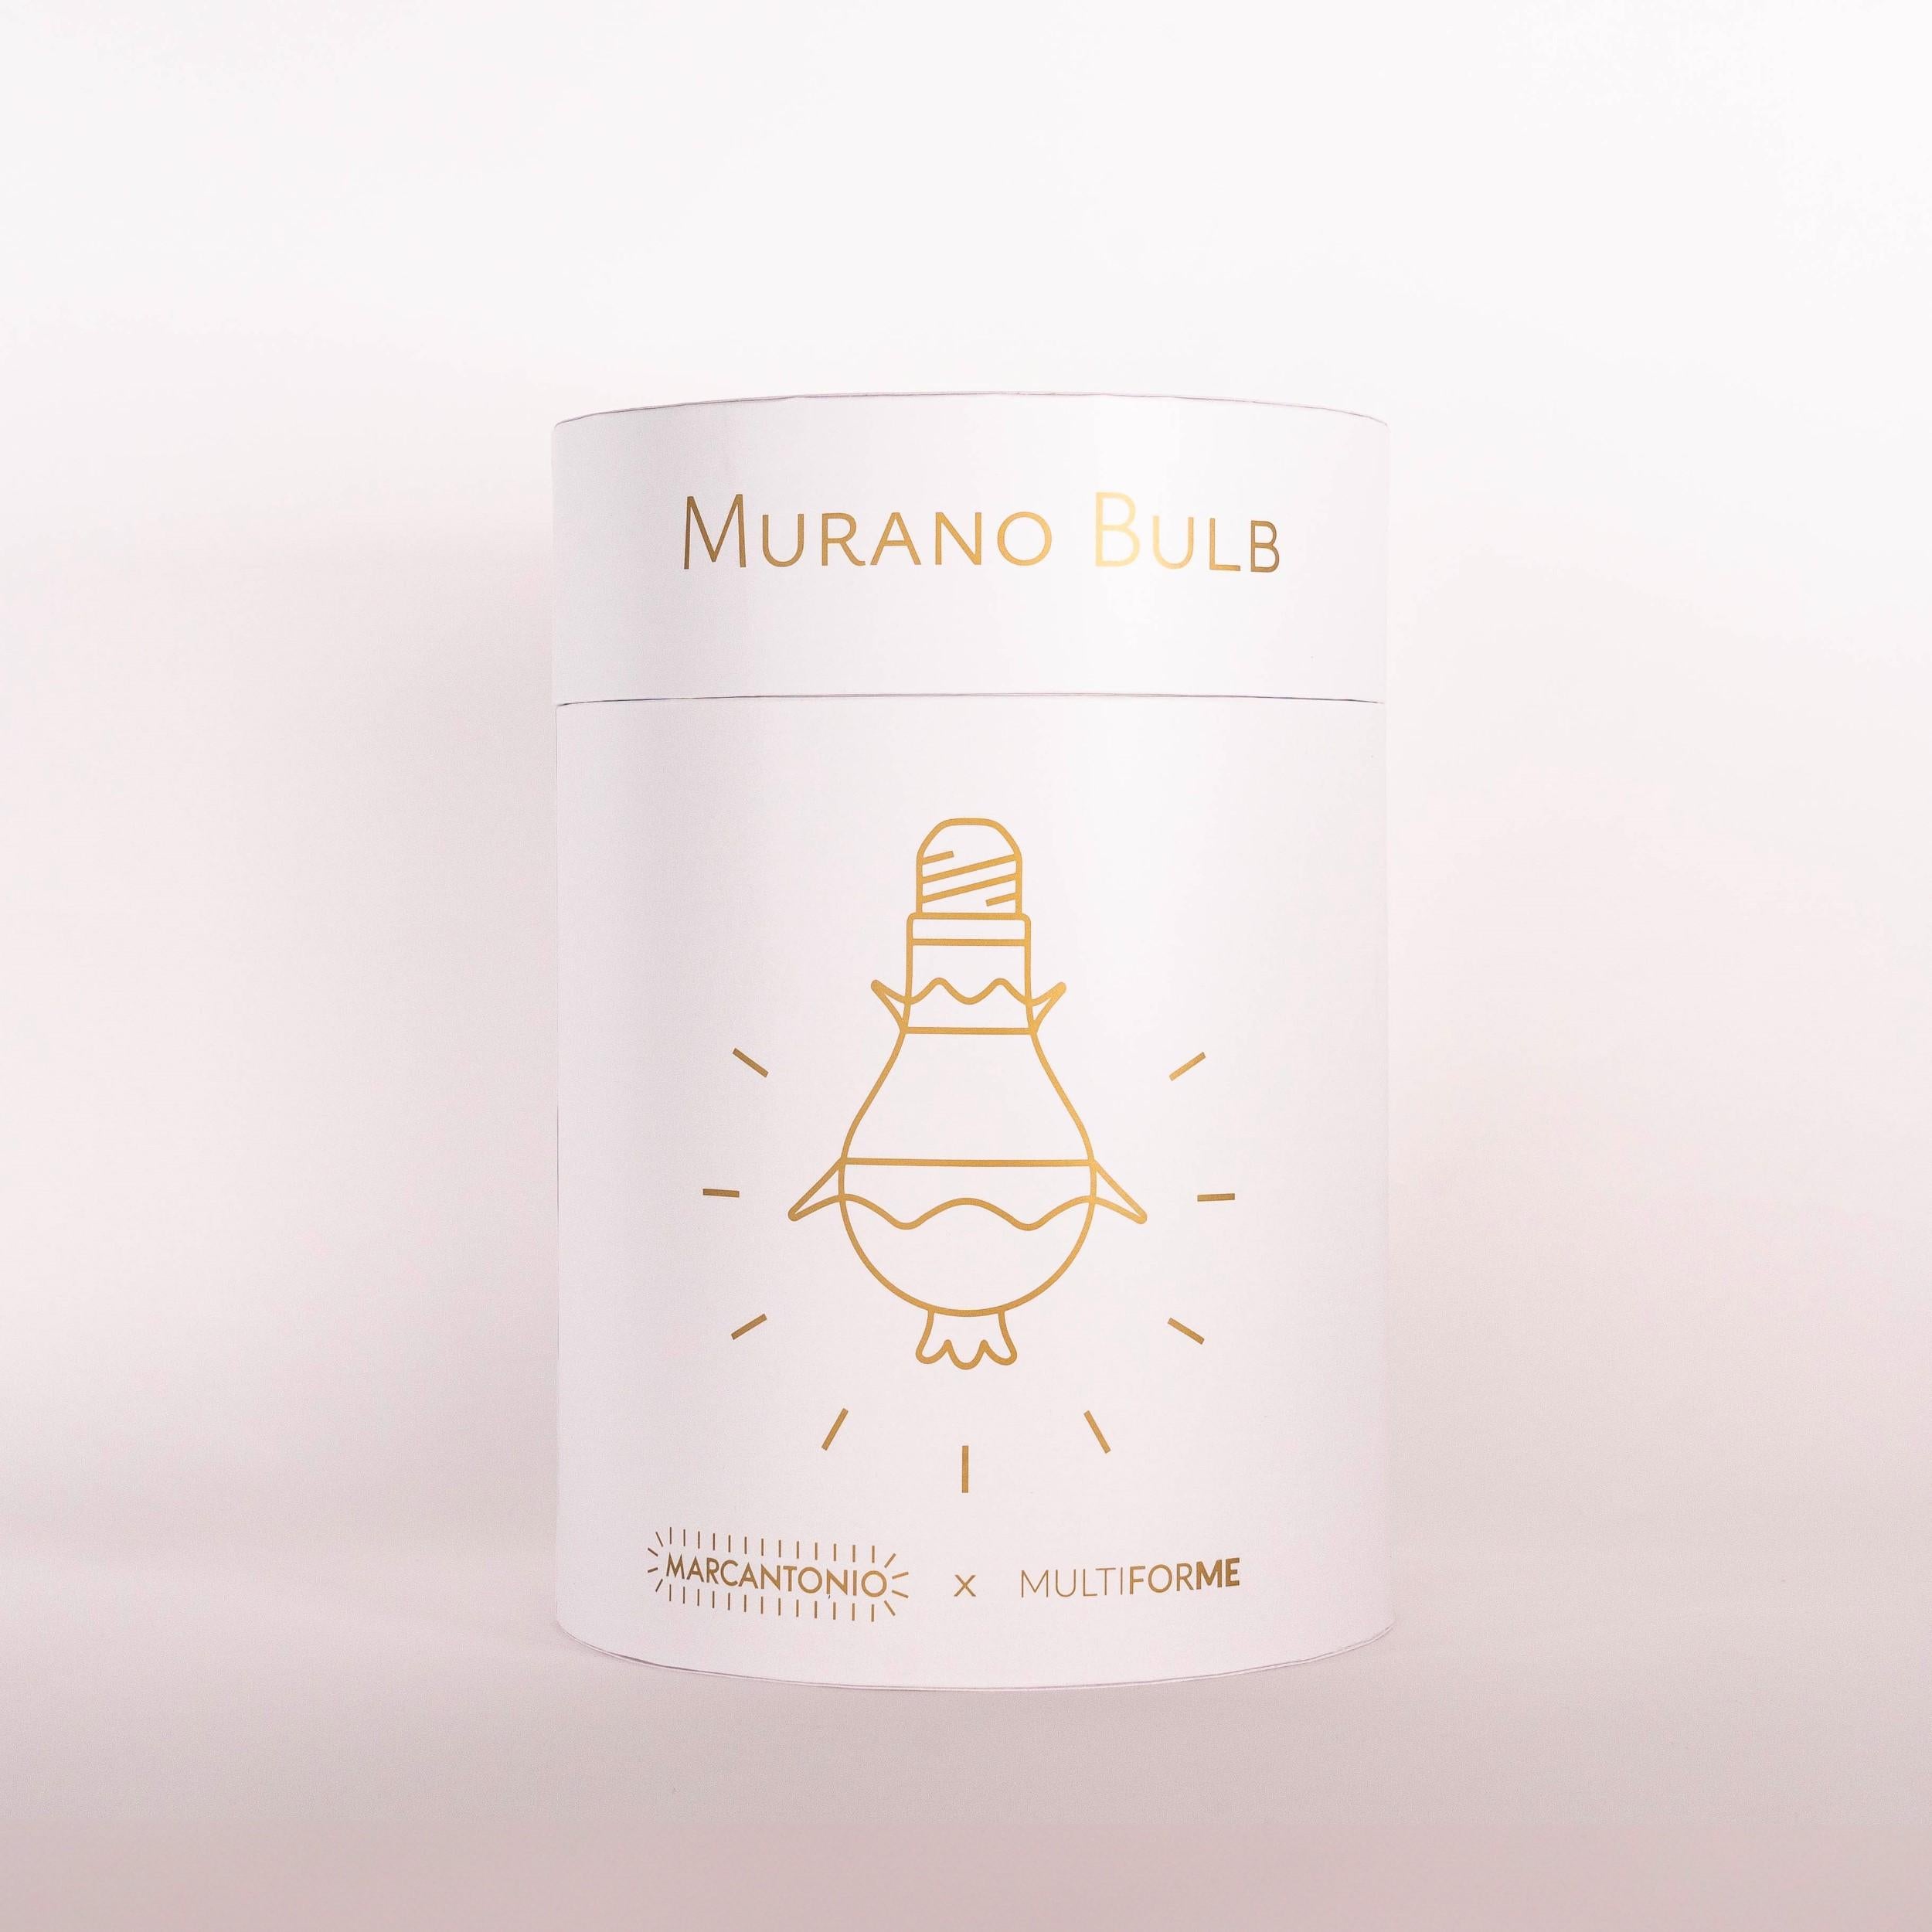 Artistic glass lightbulb chandelier Murano Bulb Marcantonio X Multiforme #12 For Sale 2